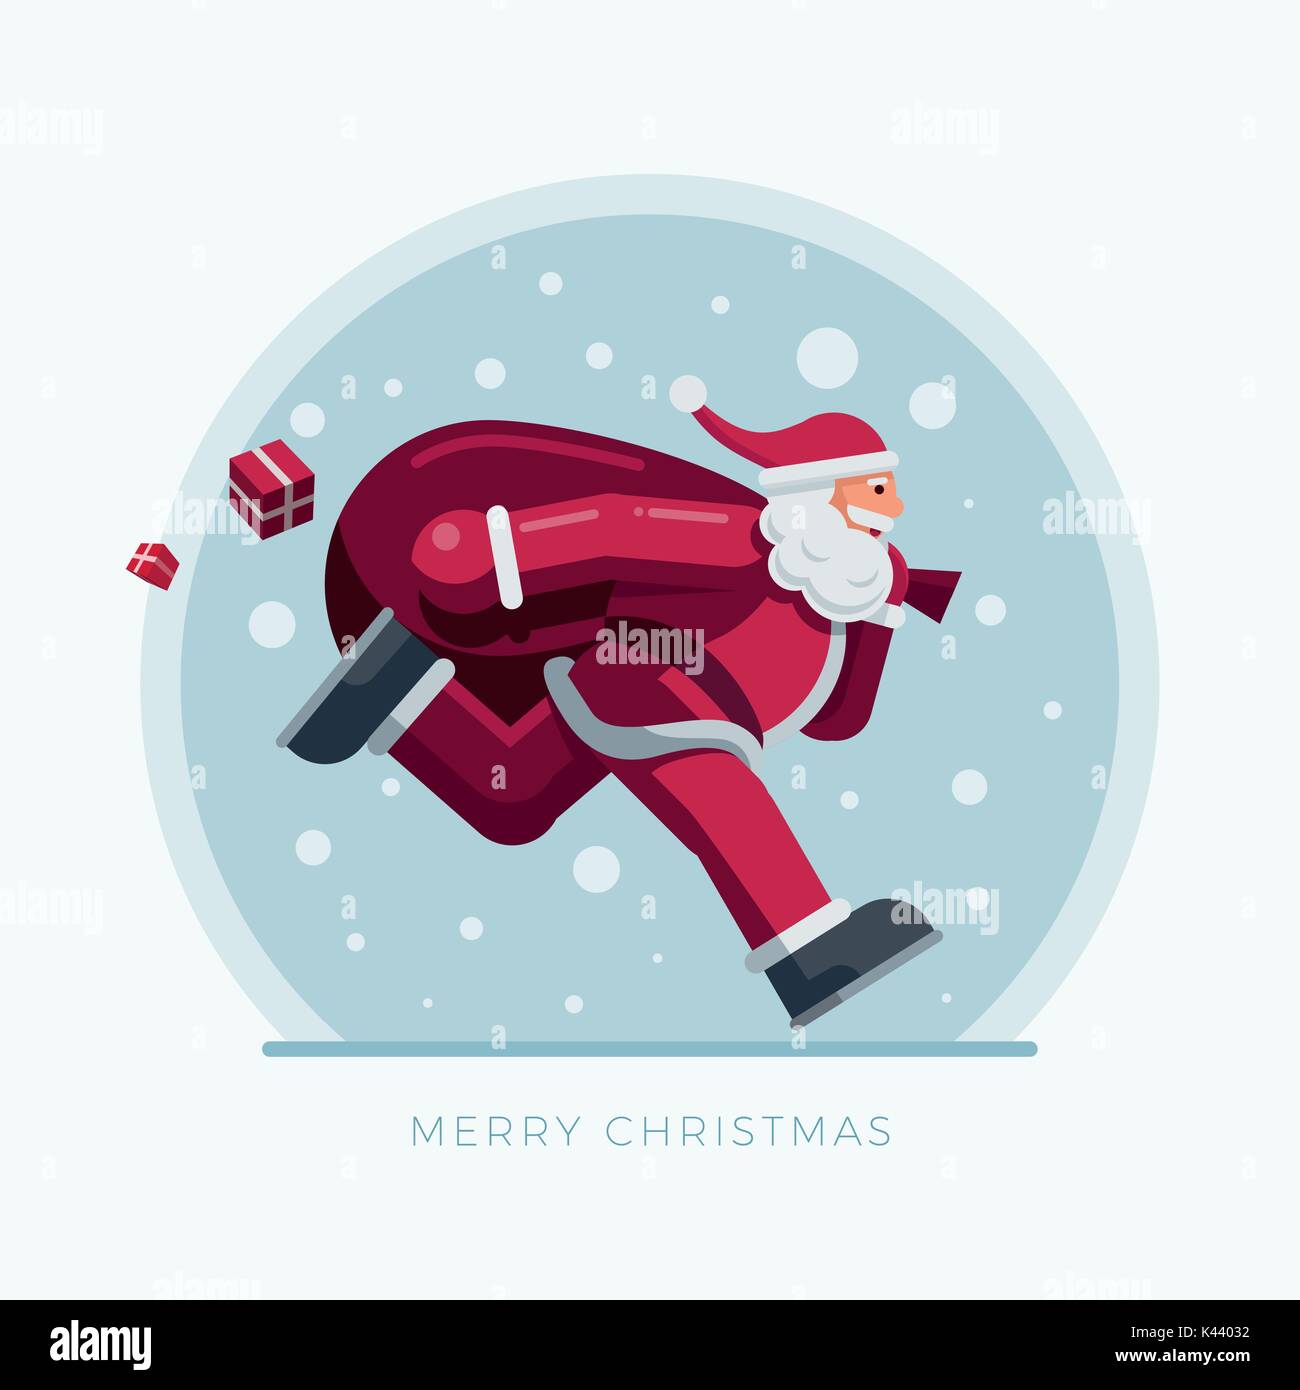 Vector illustration of Santa Claus. Christmas concept design. Stock Vector